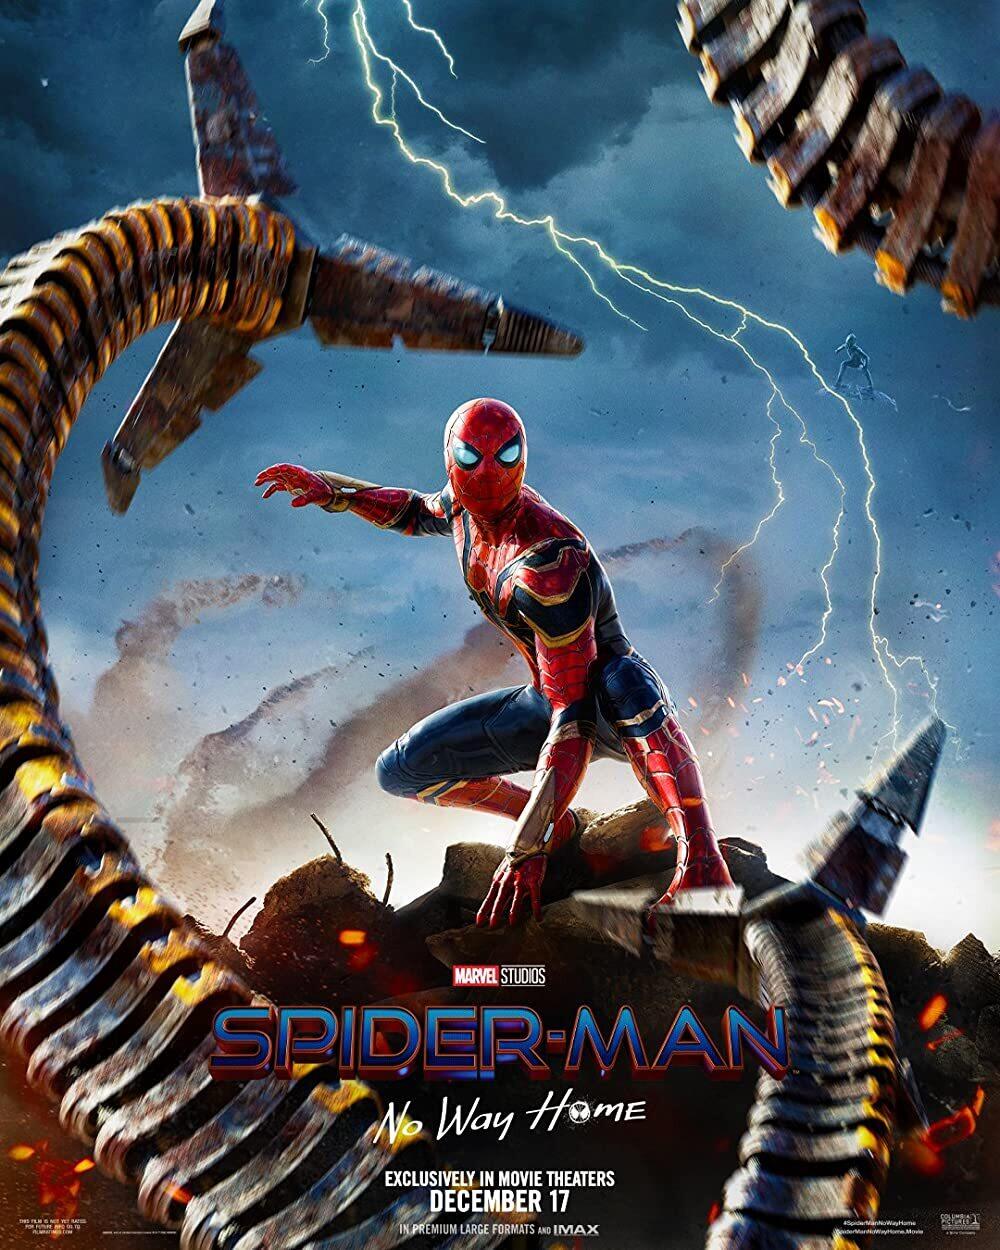 6. Spider-Man: No Way Home (2021)